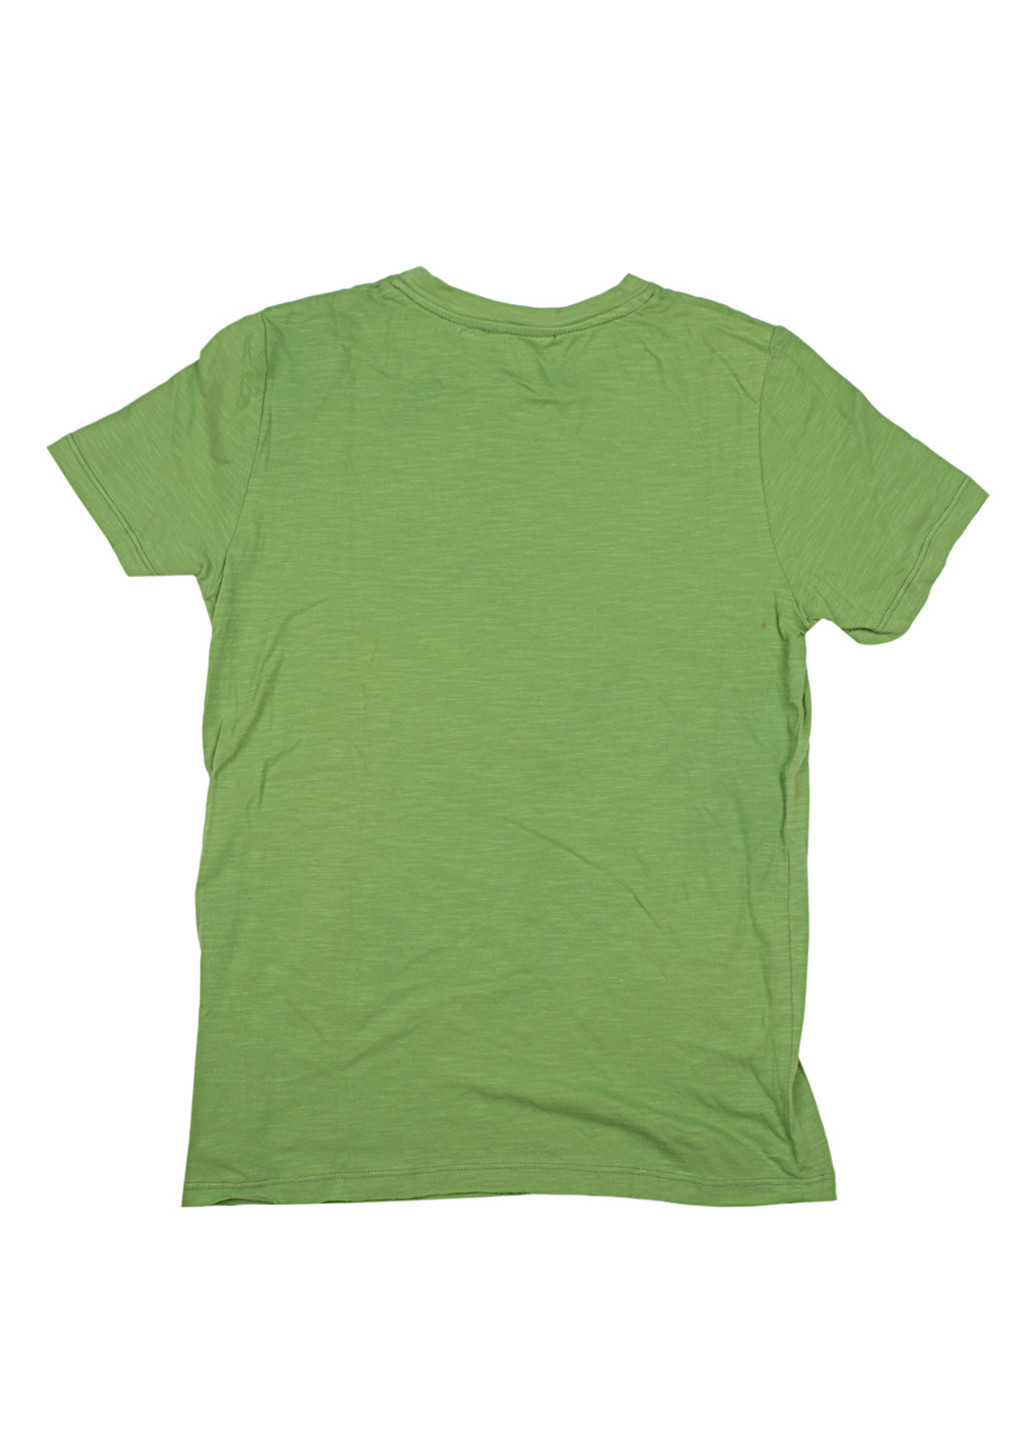 Зеленая летняя футболка с коротким рукавом Quis Quis